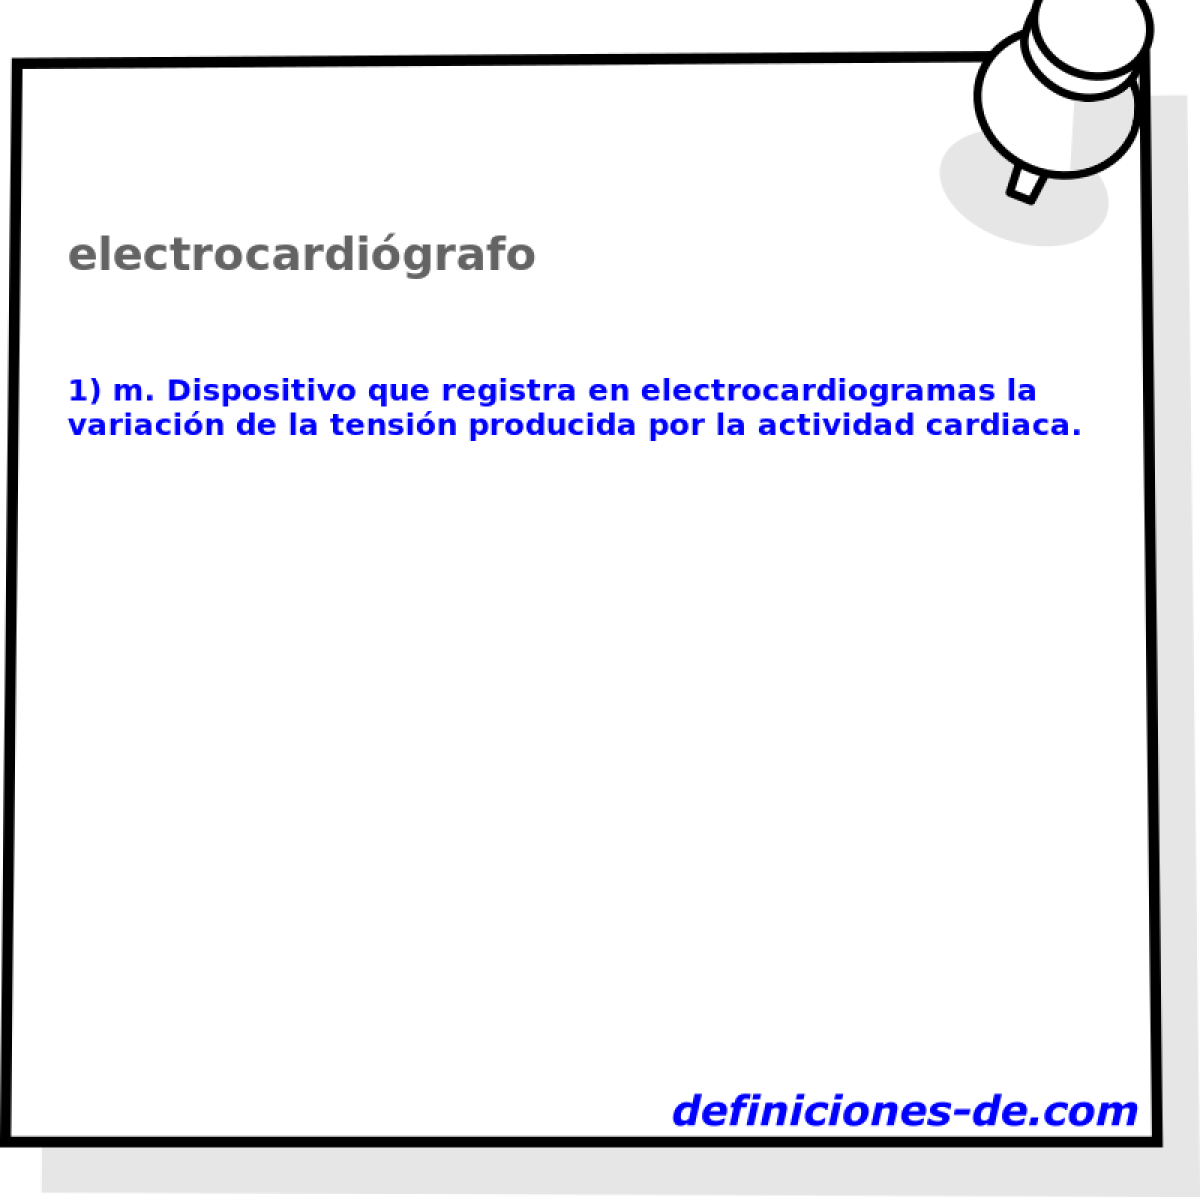 electrocardigrafo 